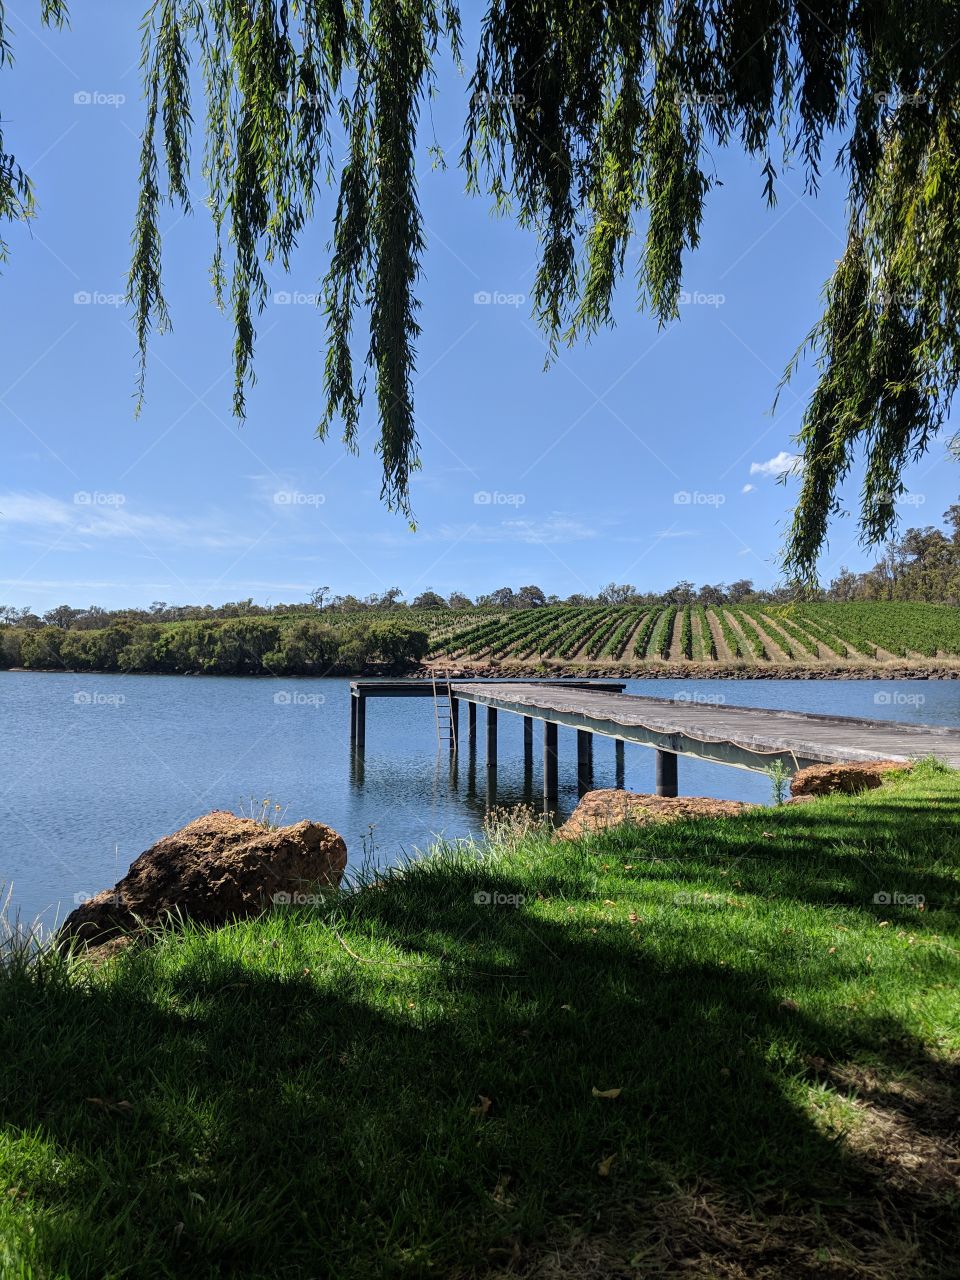 beautiful day at this vineyard in Australia